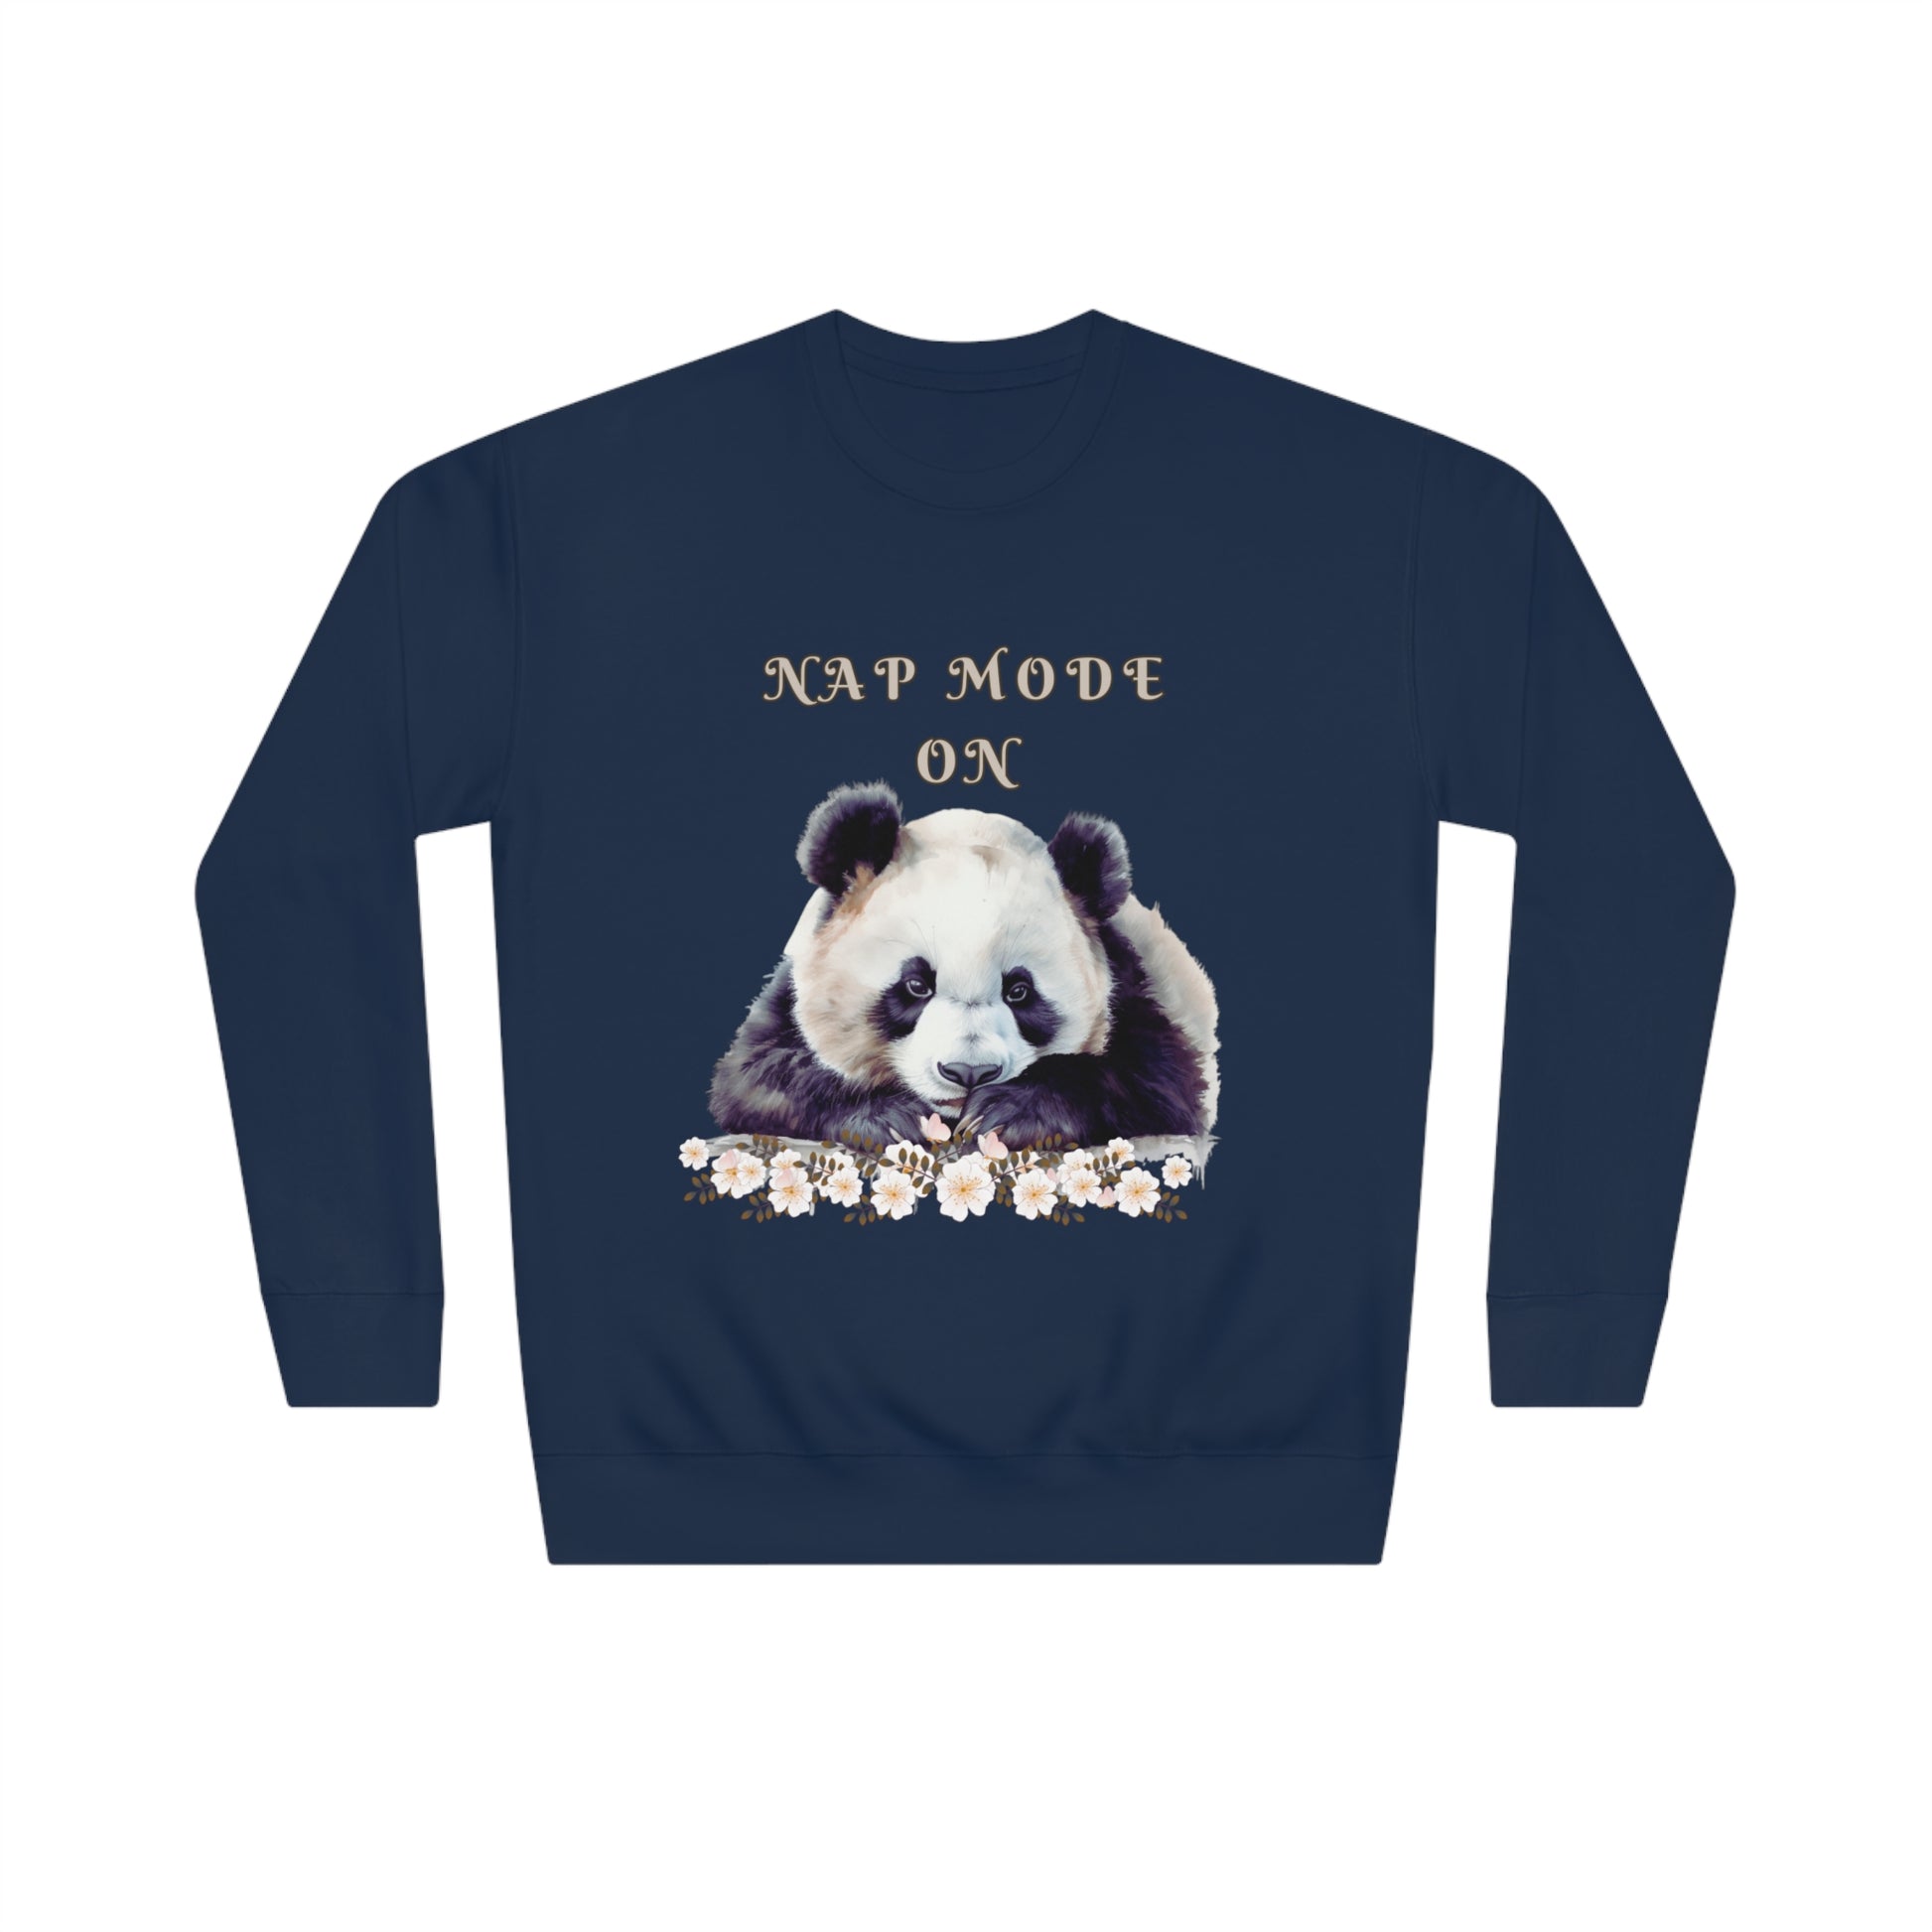 Lazy Panda Nap Mode Sweatshirt | Embrace Cozy Relaxation | Panda Lover Gift - Cozy Sweatshirt Sweatshirt Navy Blazer S 